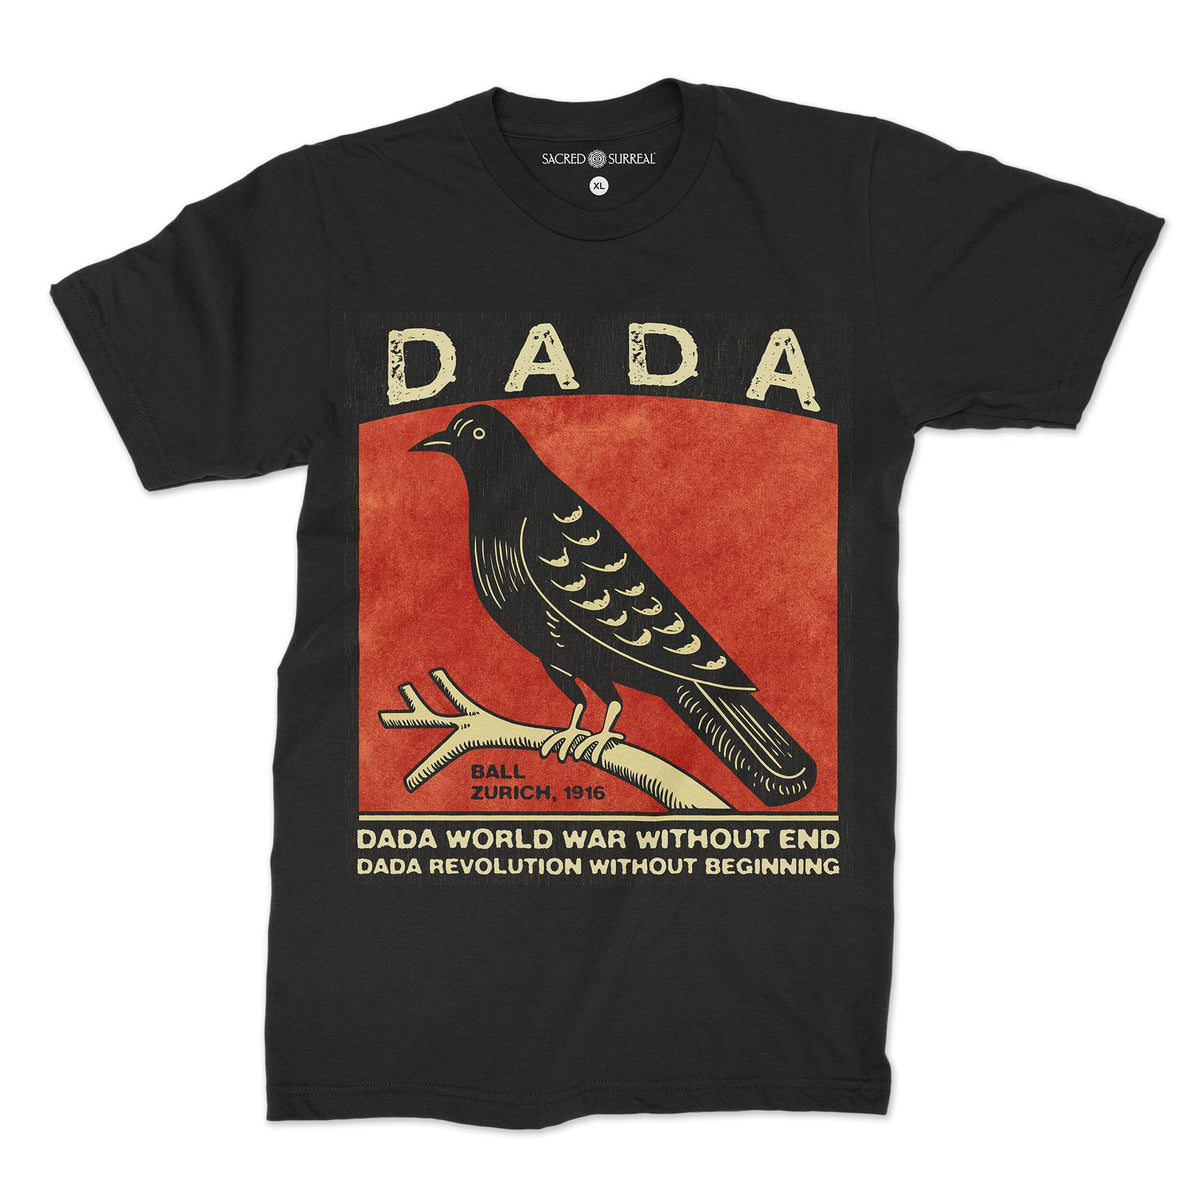 DTG T-Shirt S / Black Dada Manifesto, 1918 T-Shirt (Surrealism Inspiration) Crow, Raven, Fine Art Graphic Tee